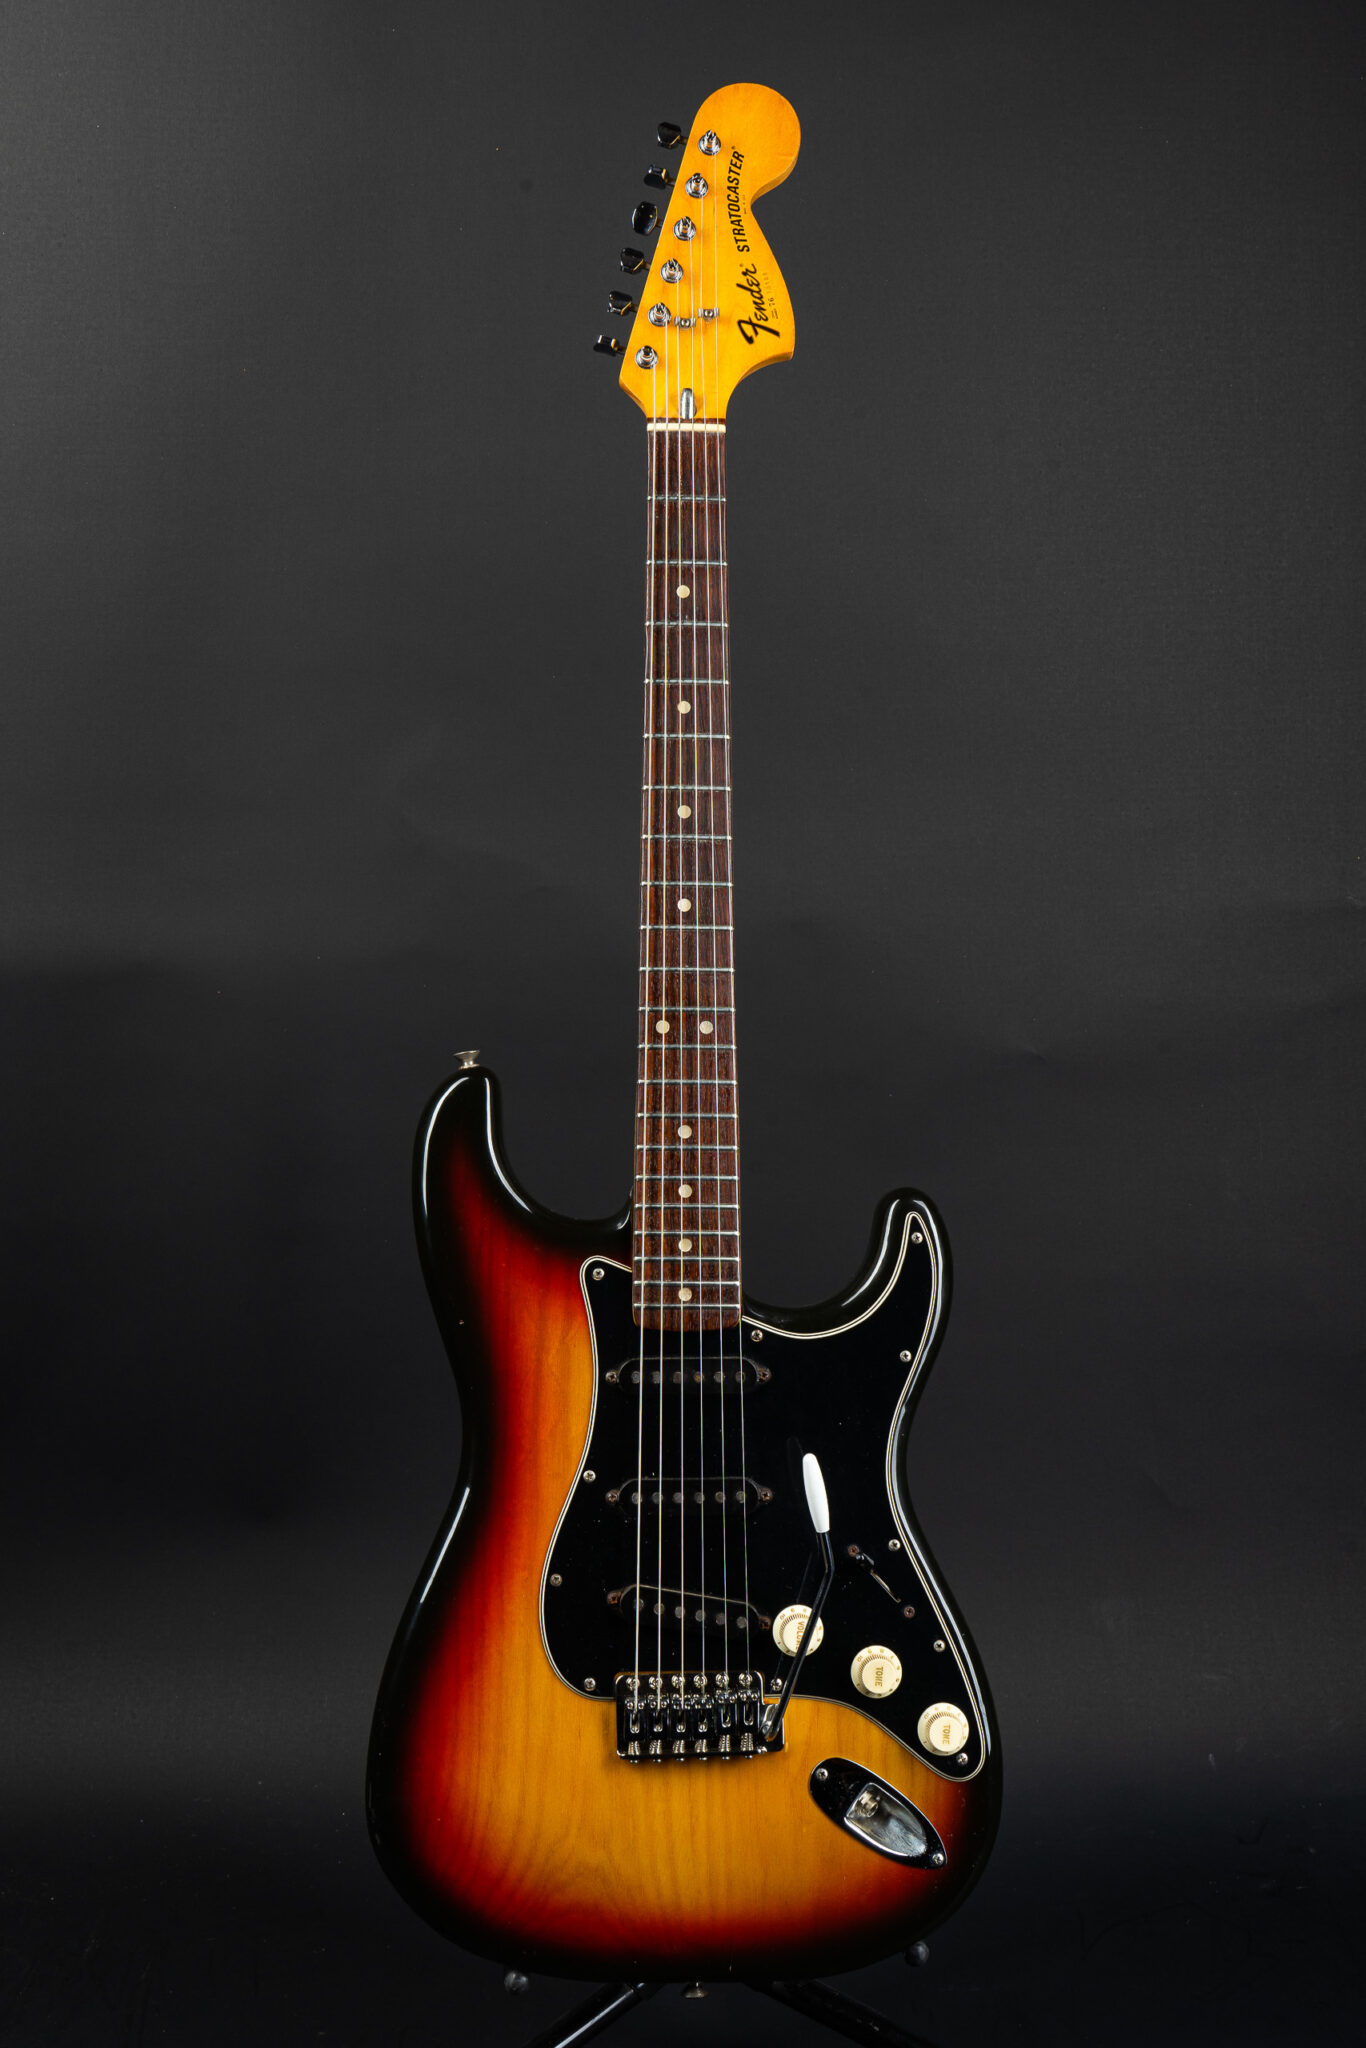 1976 Fender Strat Sunburst All Original w/Original Case and Paperwork